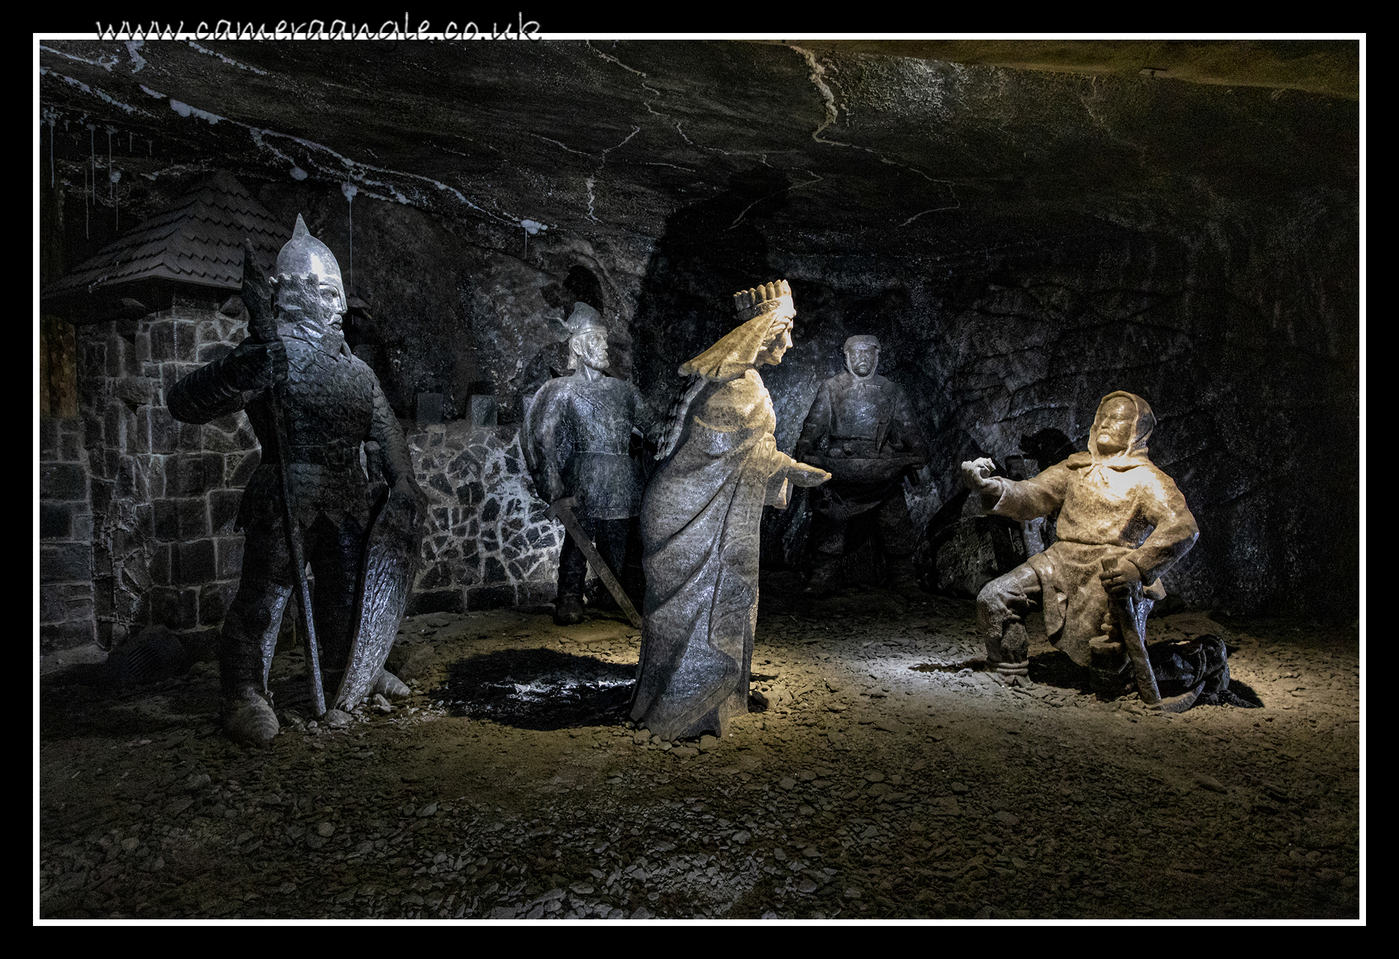 Salt Statues
Keywords: Wieliczka Salt Mine Statues 2019 Krakow